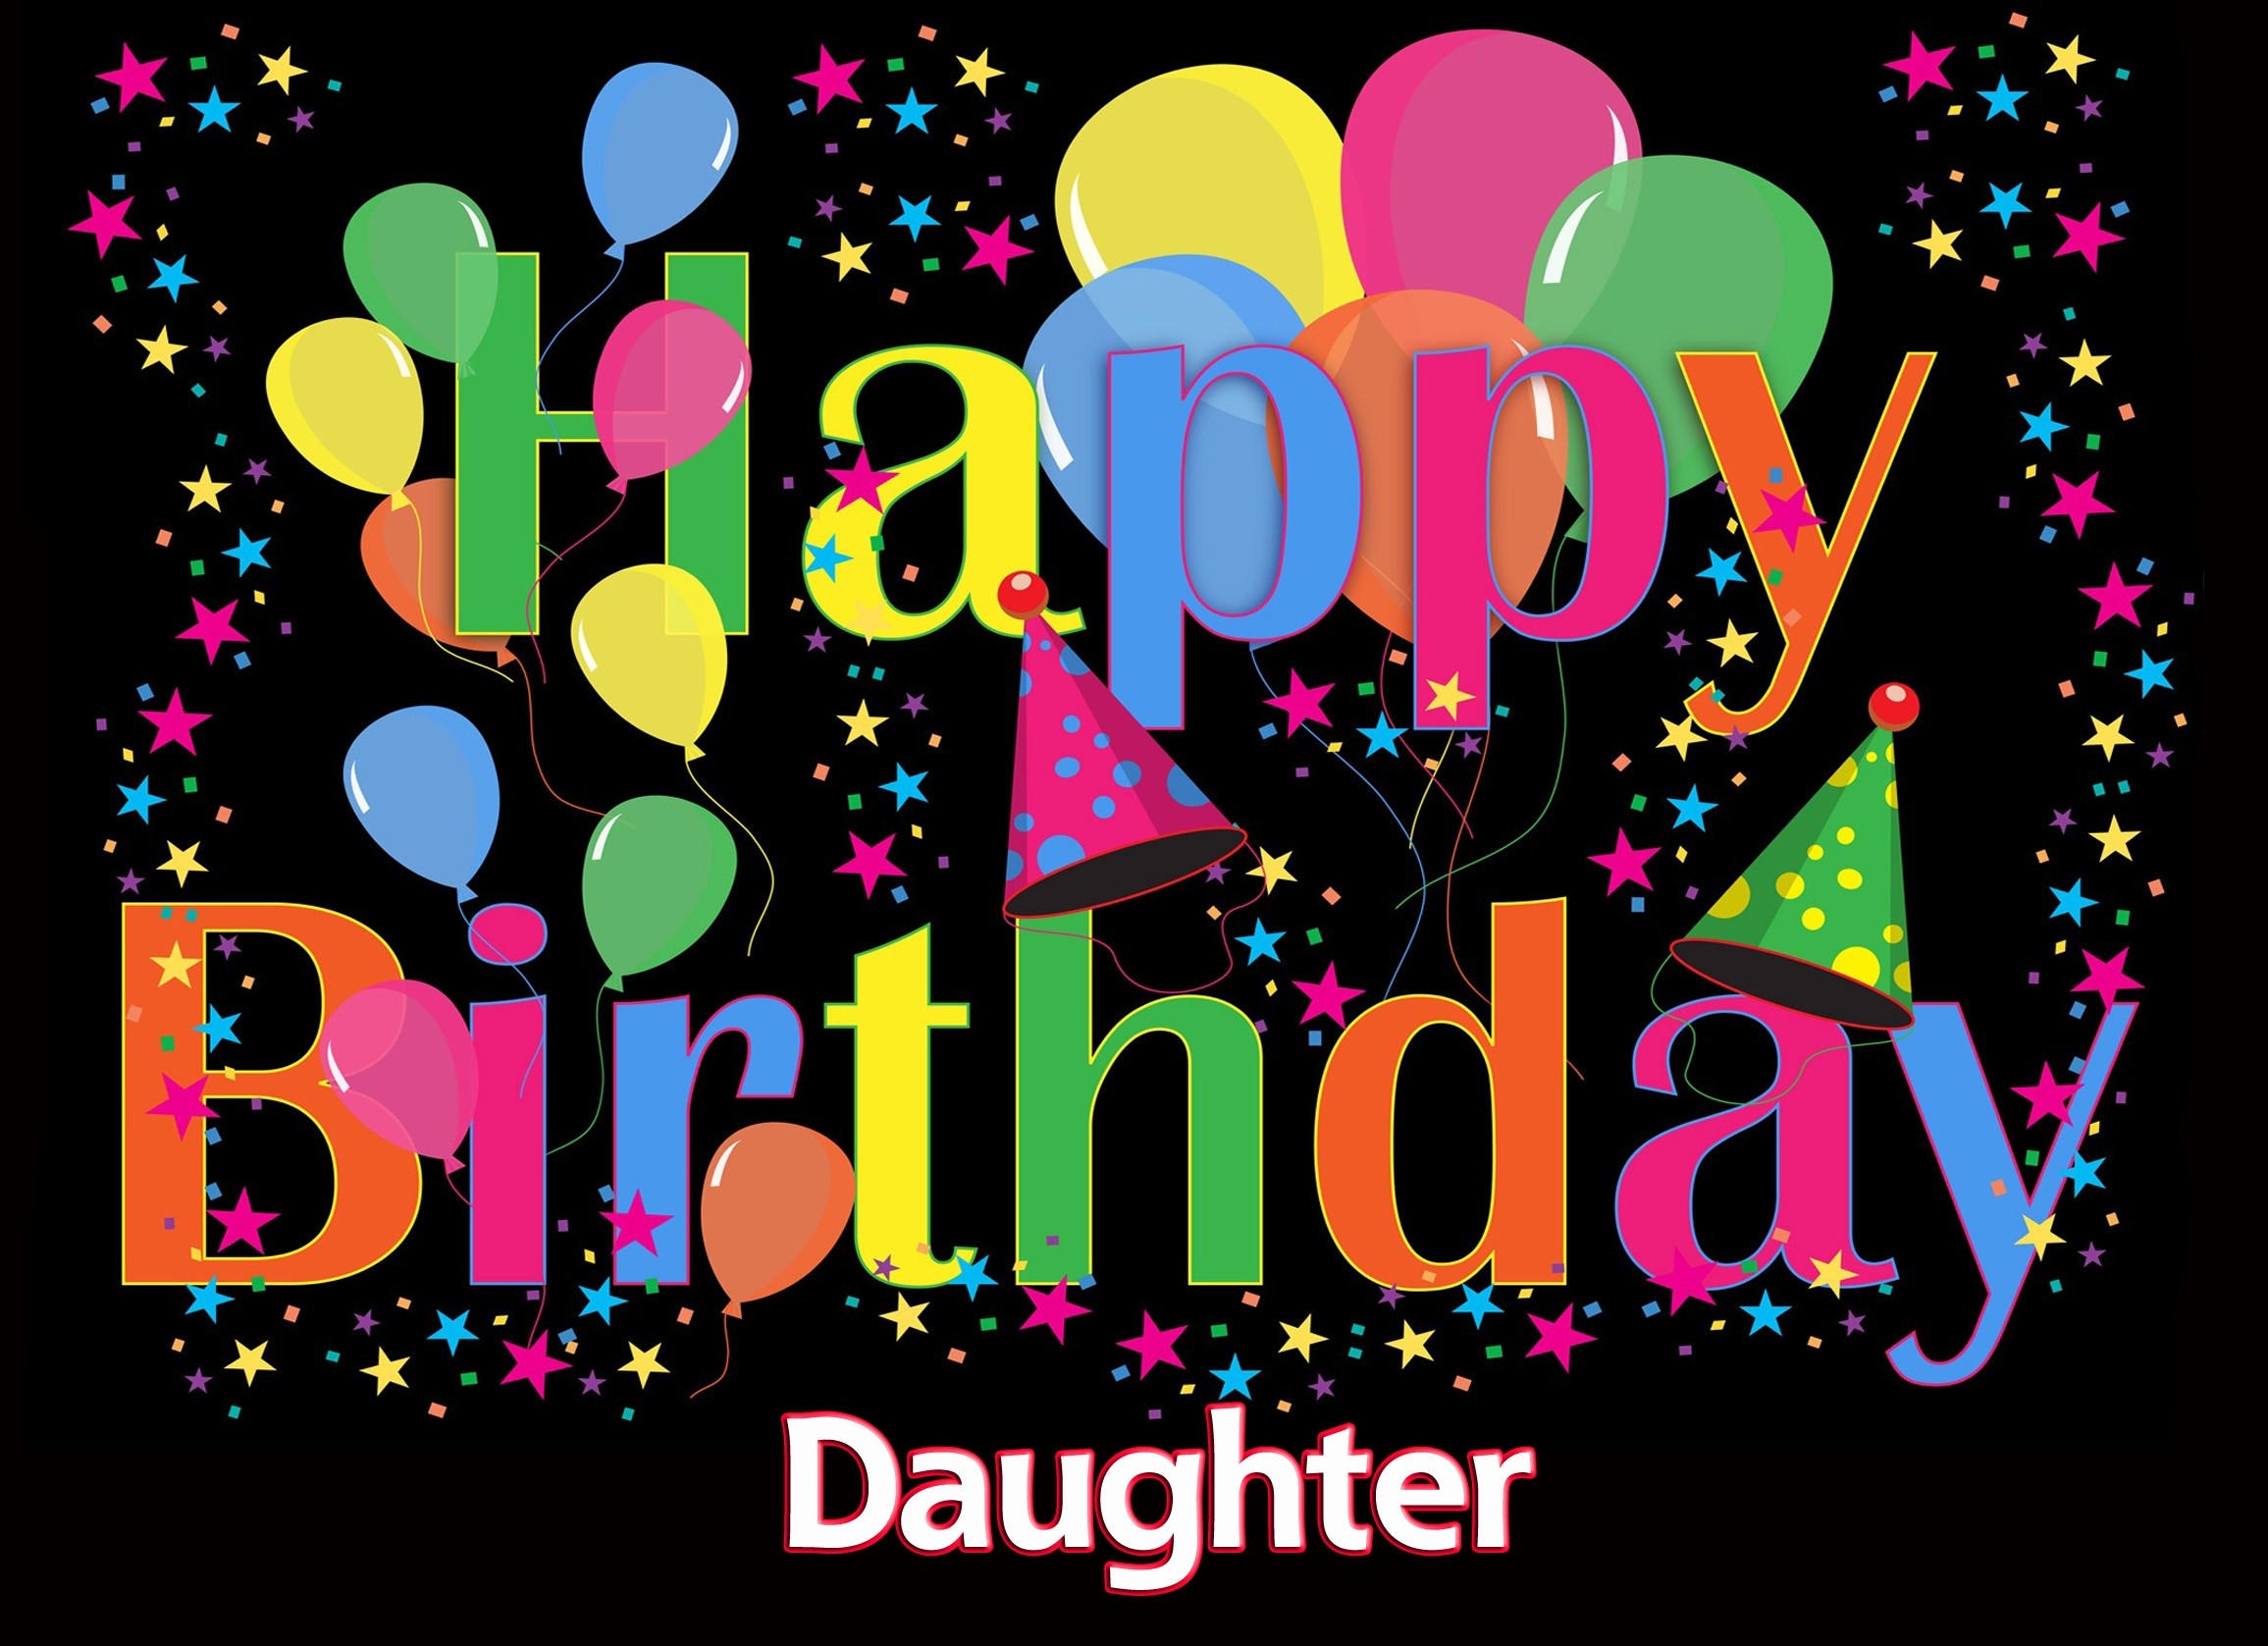 Happy Birthday 'Daughter' Greeting Card